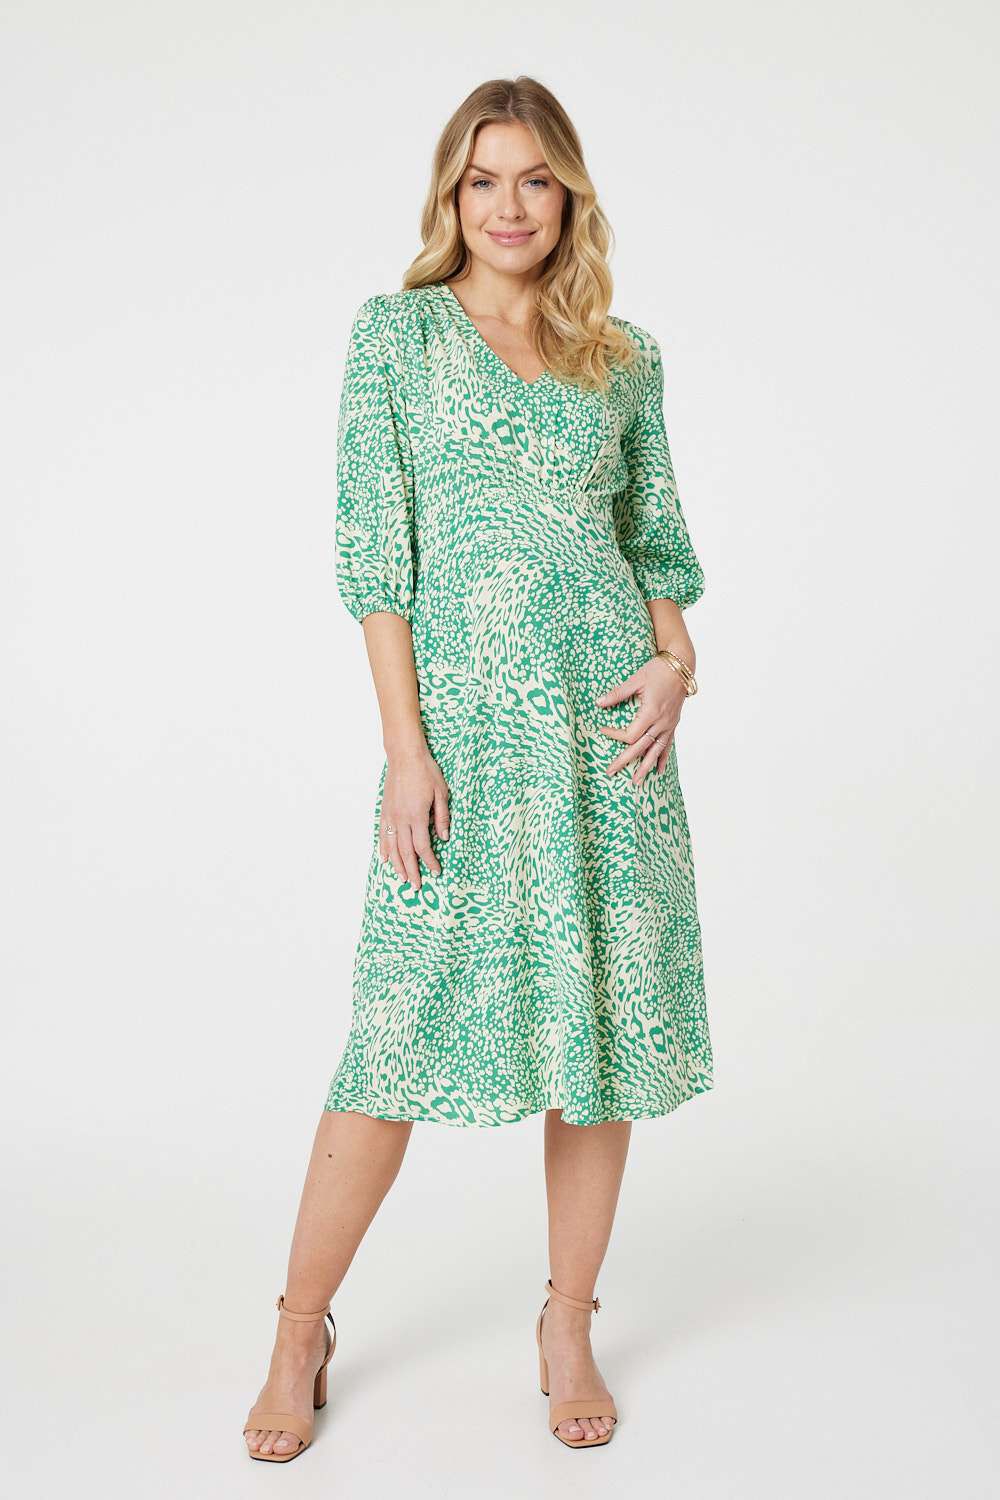 Izabel London Green - Animal Print Slim Fit Midi Dress, Size: 16